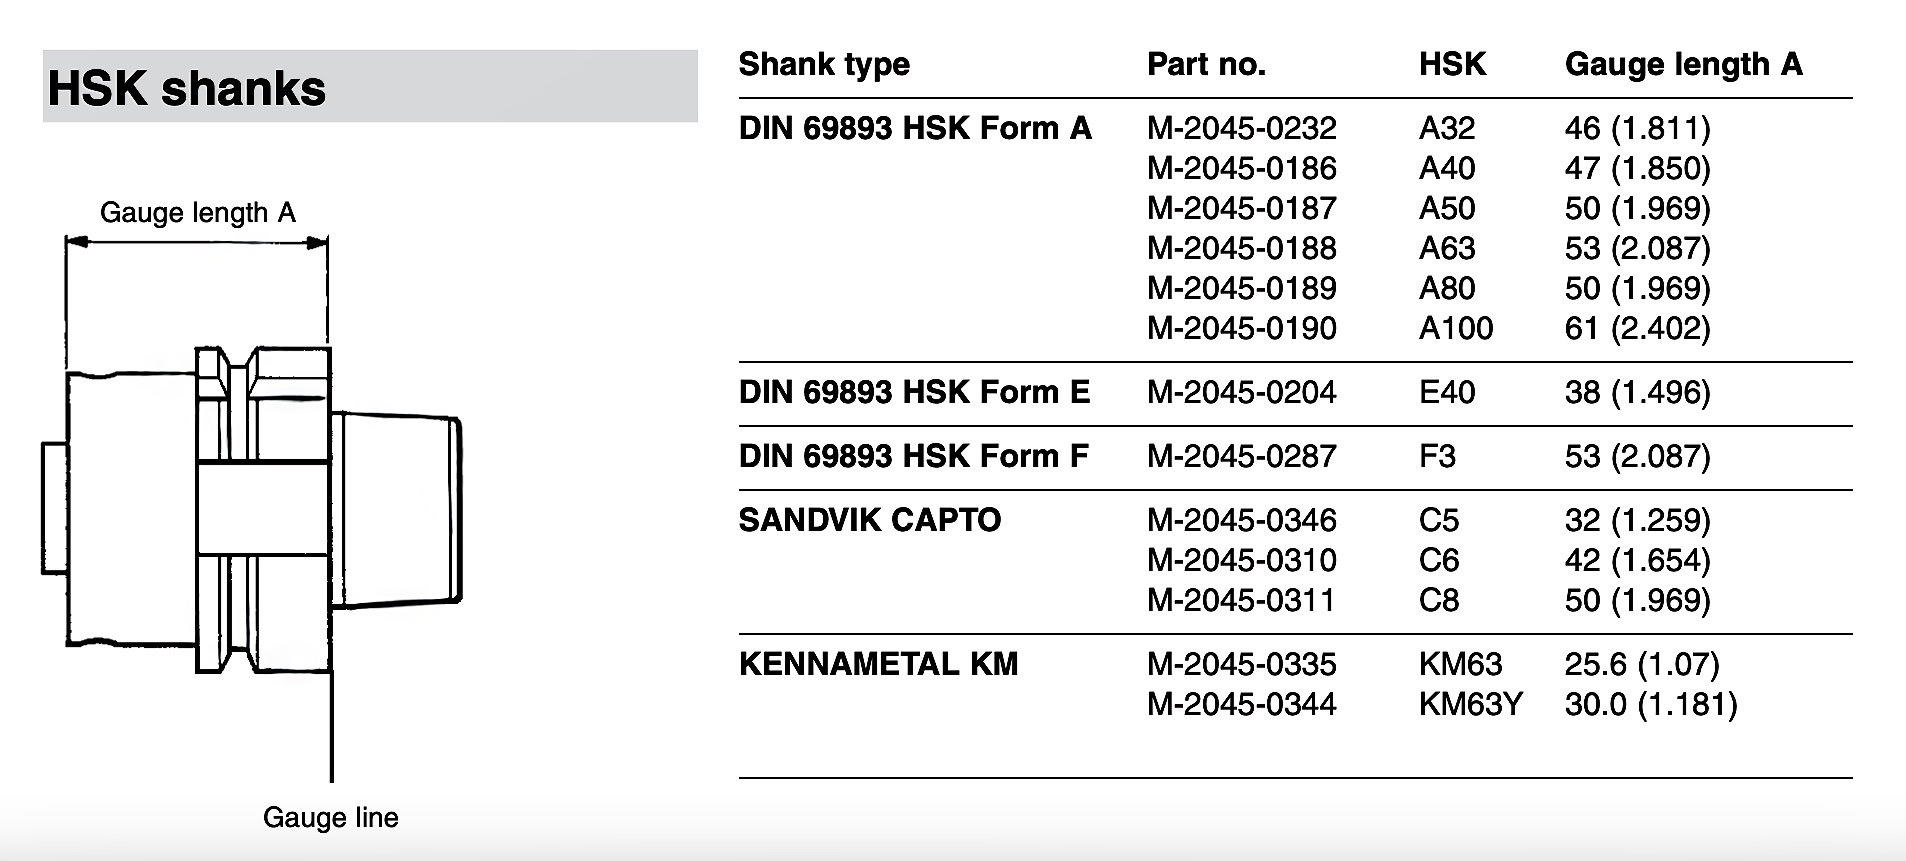 renishaw-sandvik-capto-machine-tool-shank-c6-42-mm-data-sheet-.jpeg